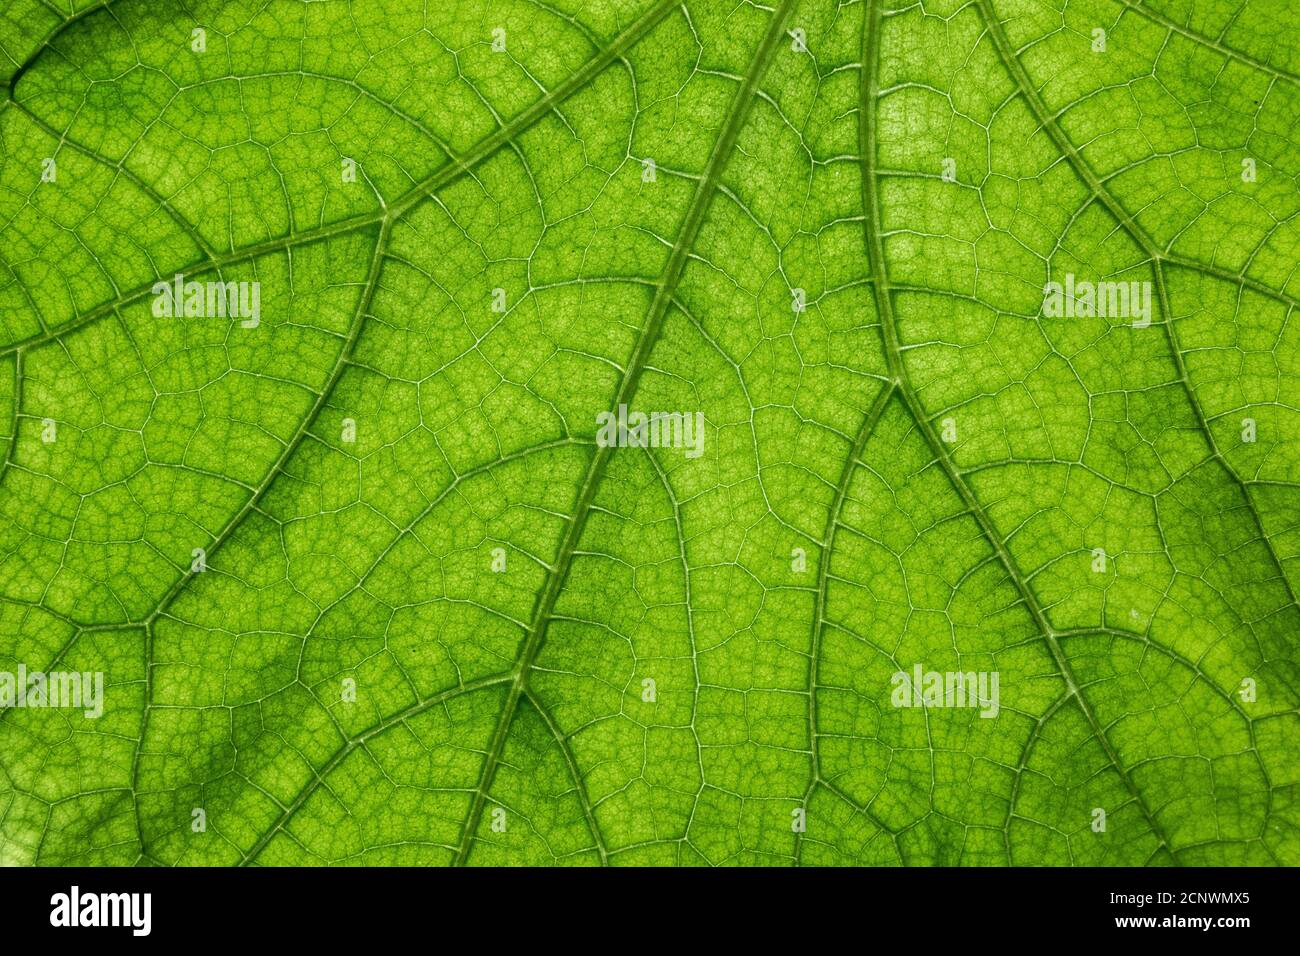 Big green leaf with many leaf veins Stock Photo